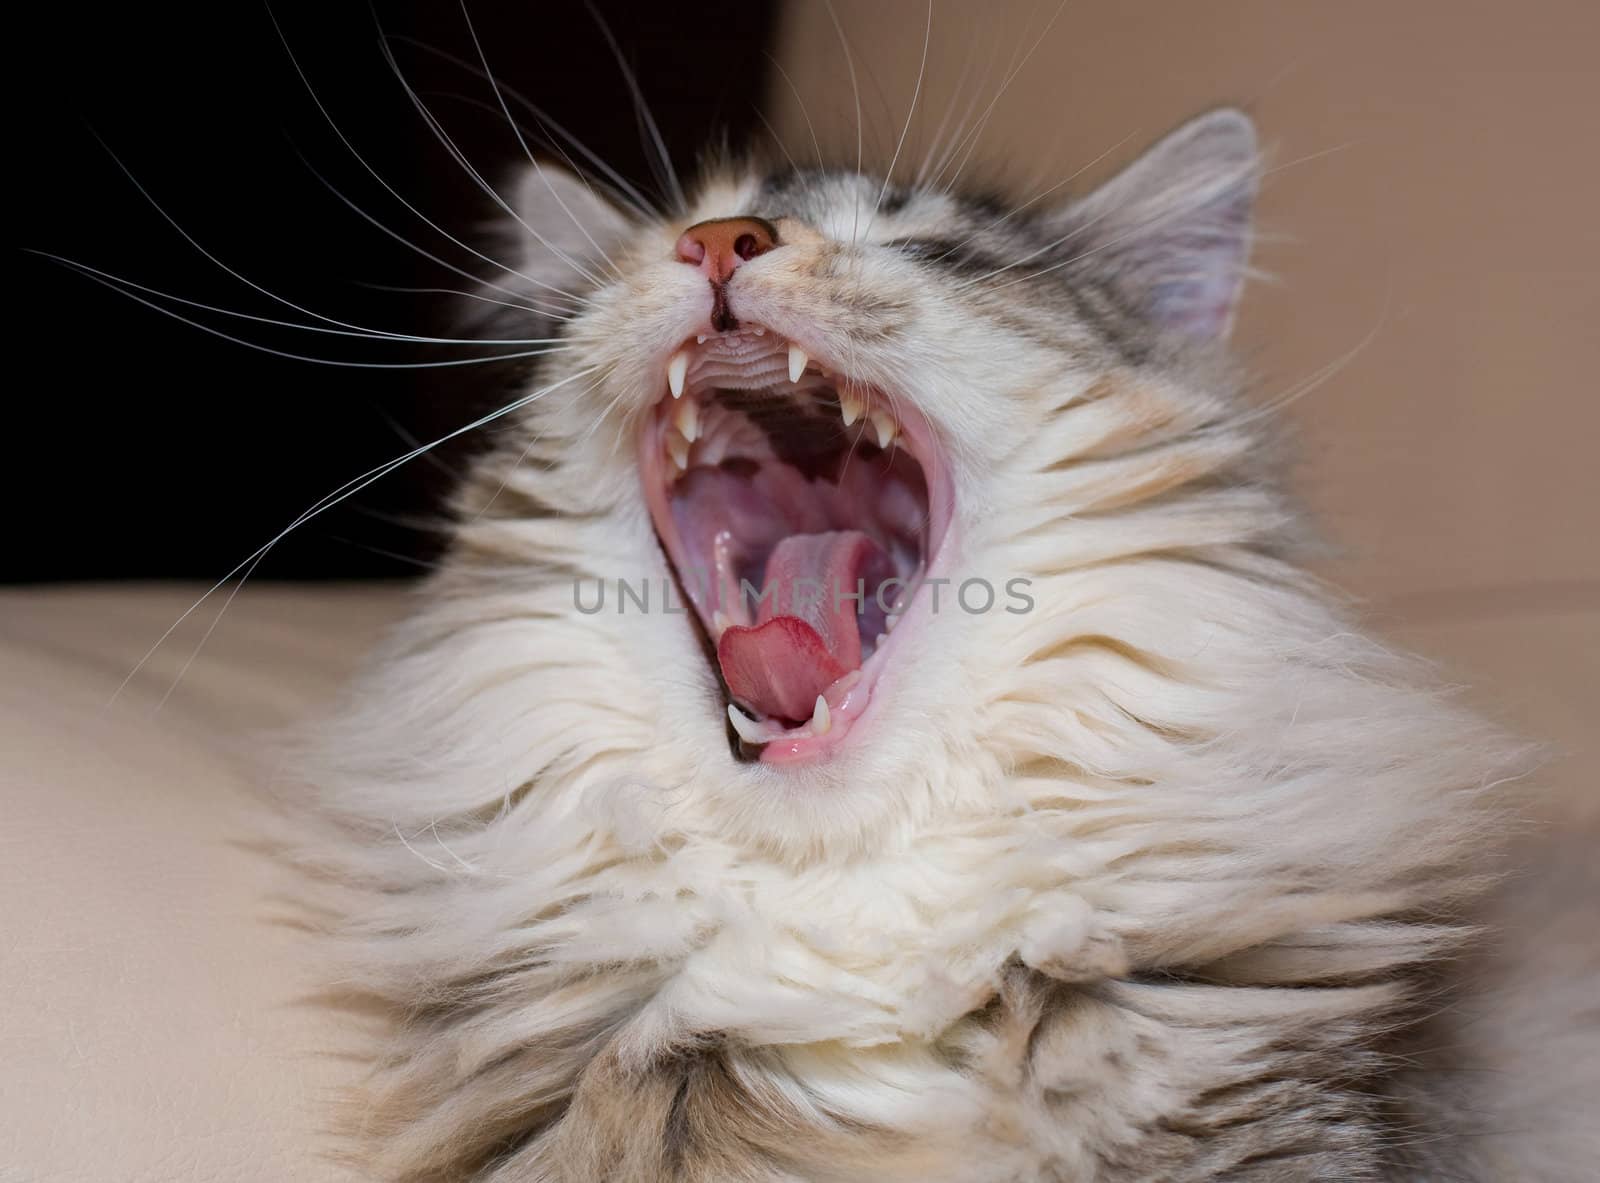 Yawning cat main coone sleepy